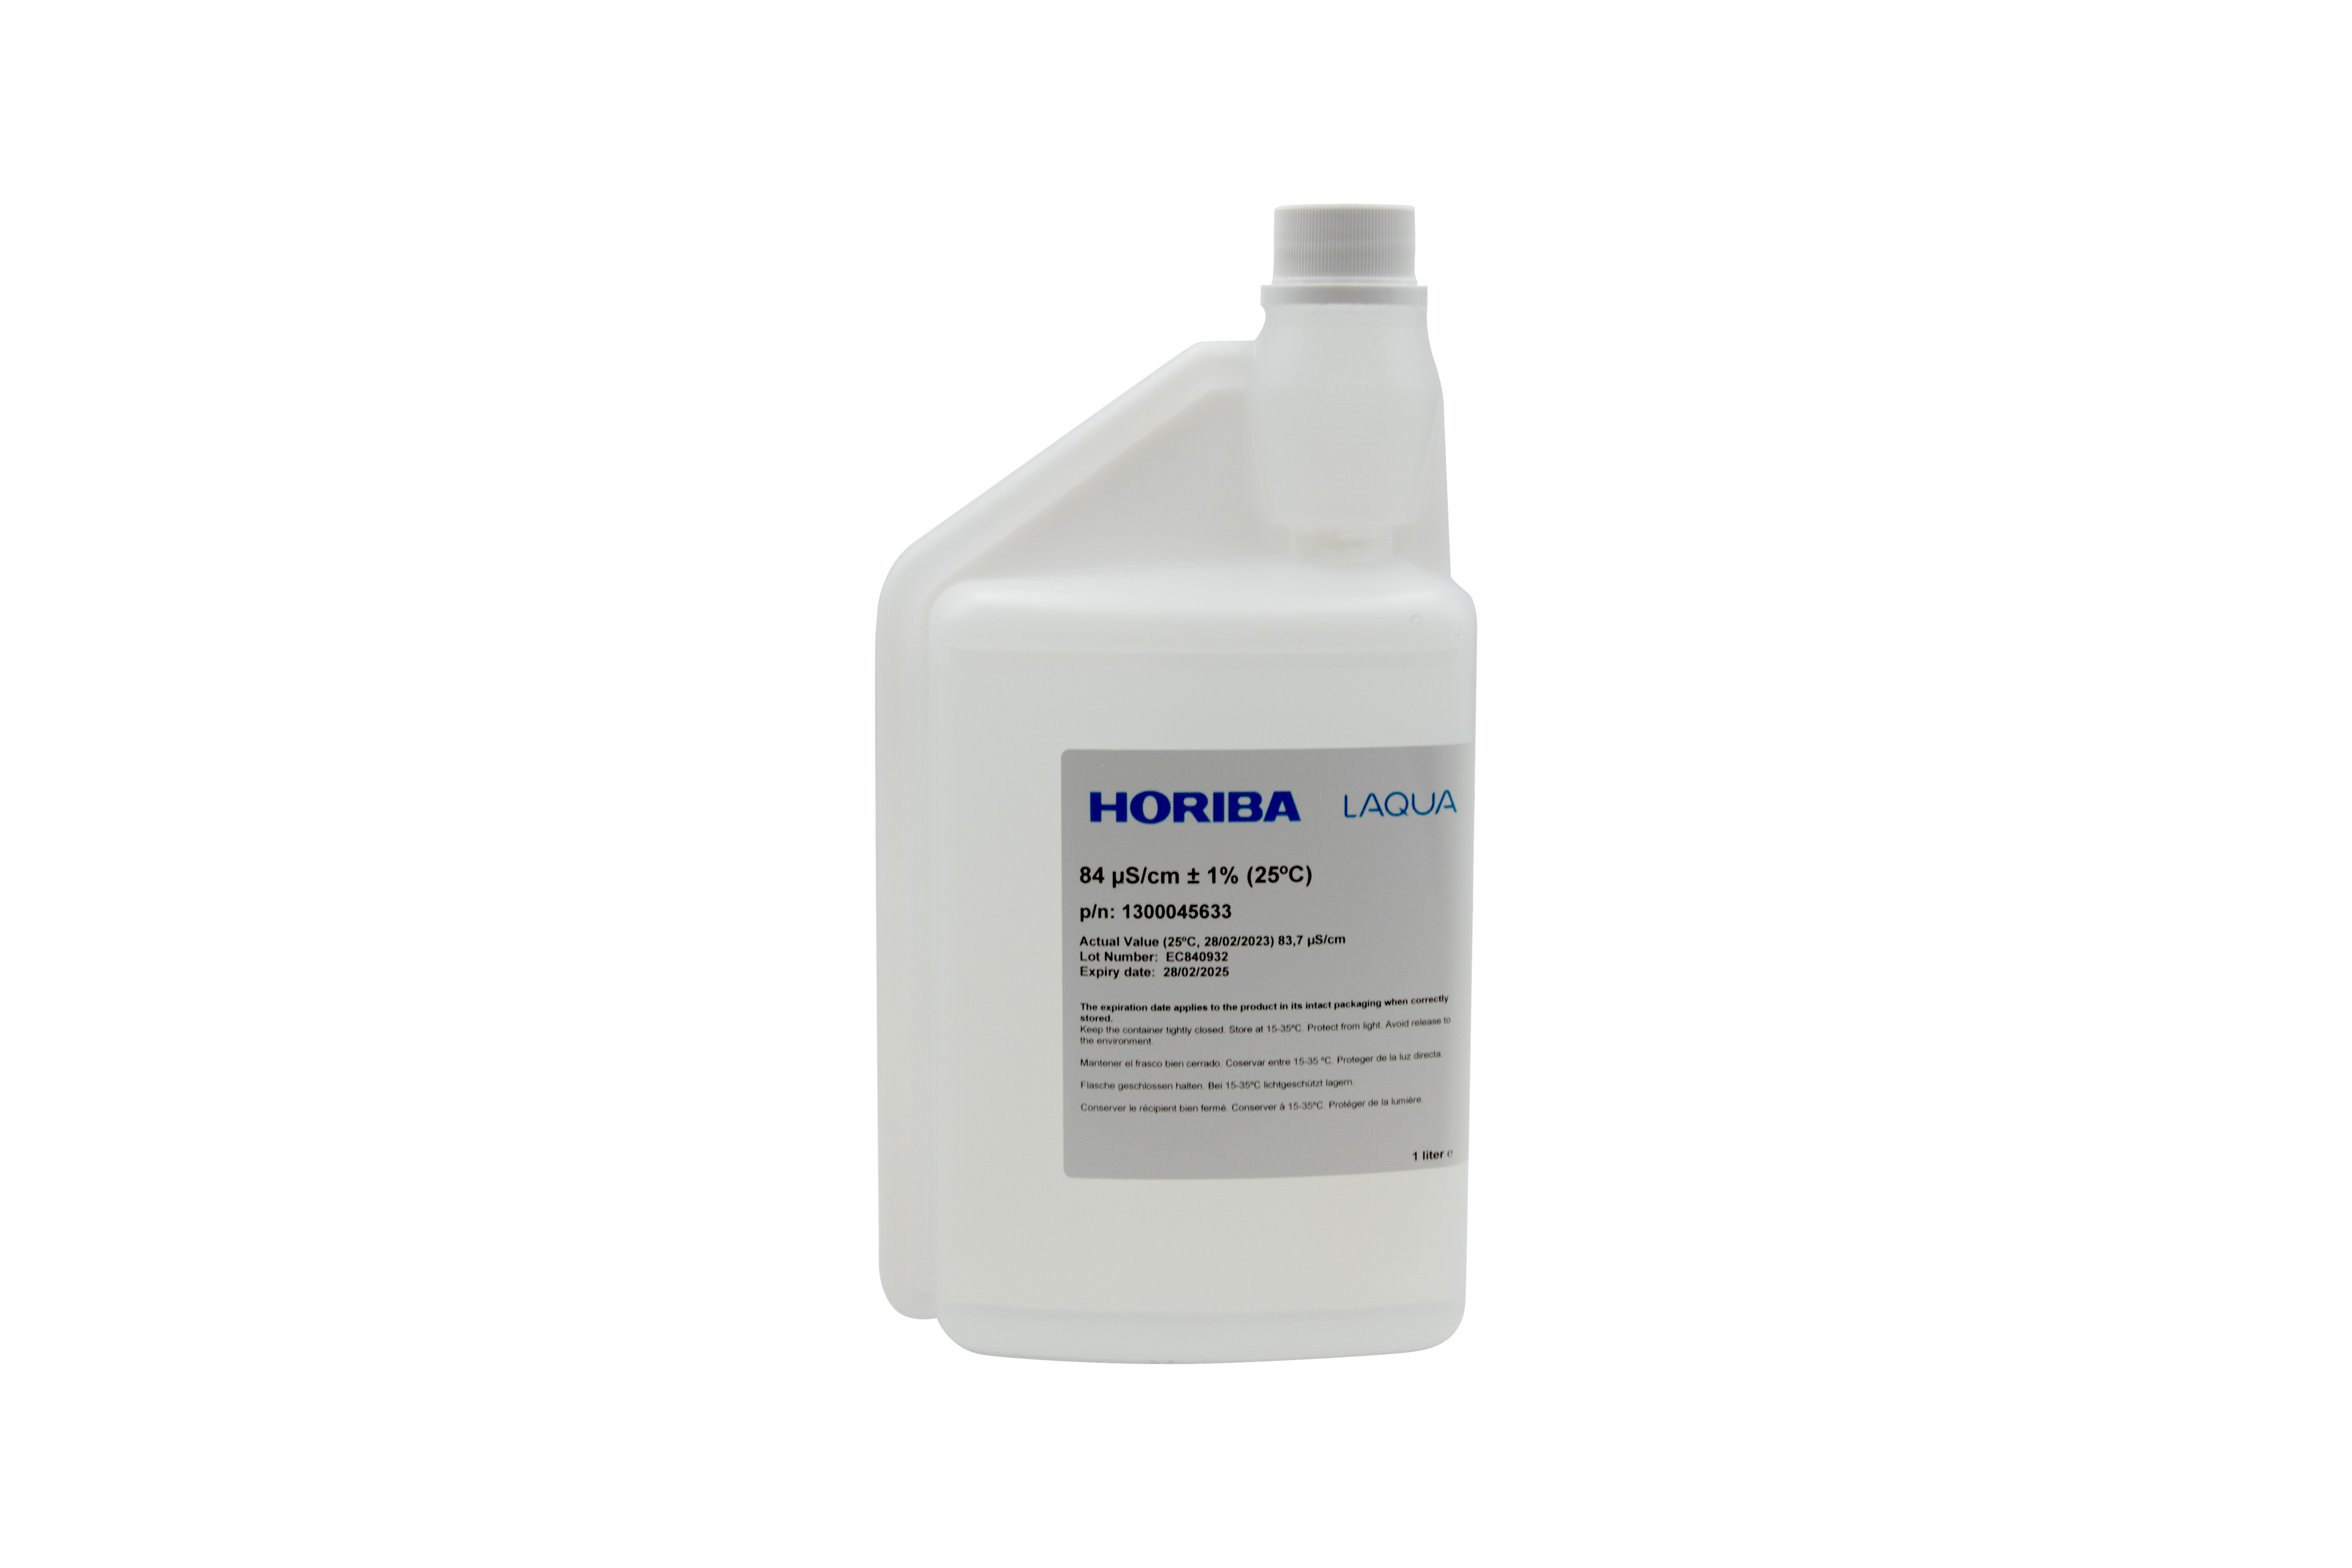 HORIBA 84 μS/cm conductivity calibration solution 1000ml (1000-EC-84)